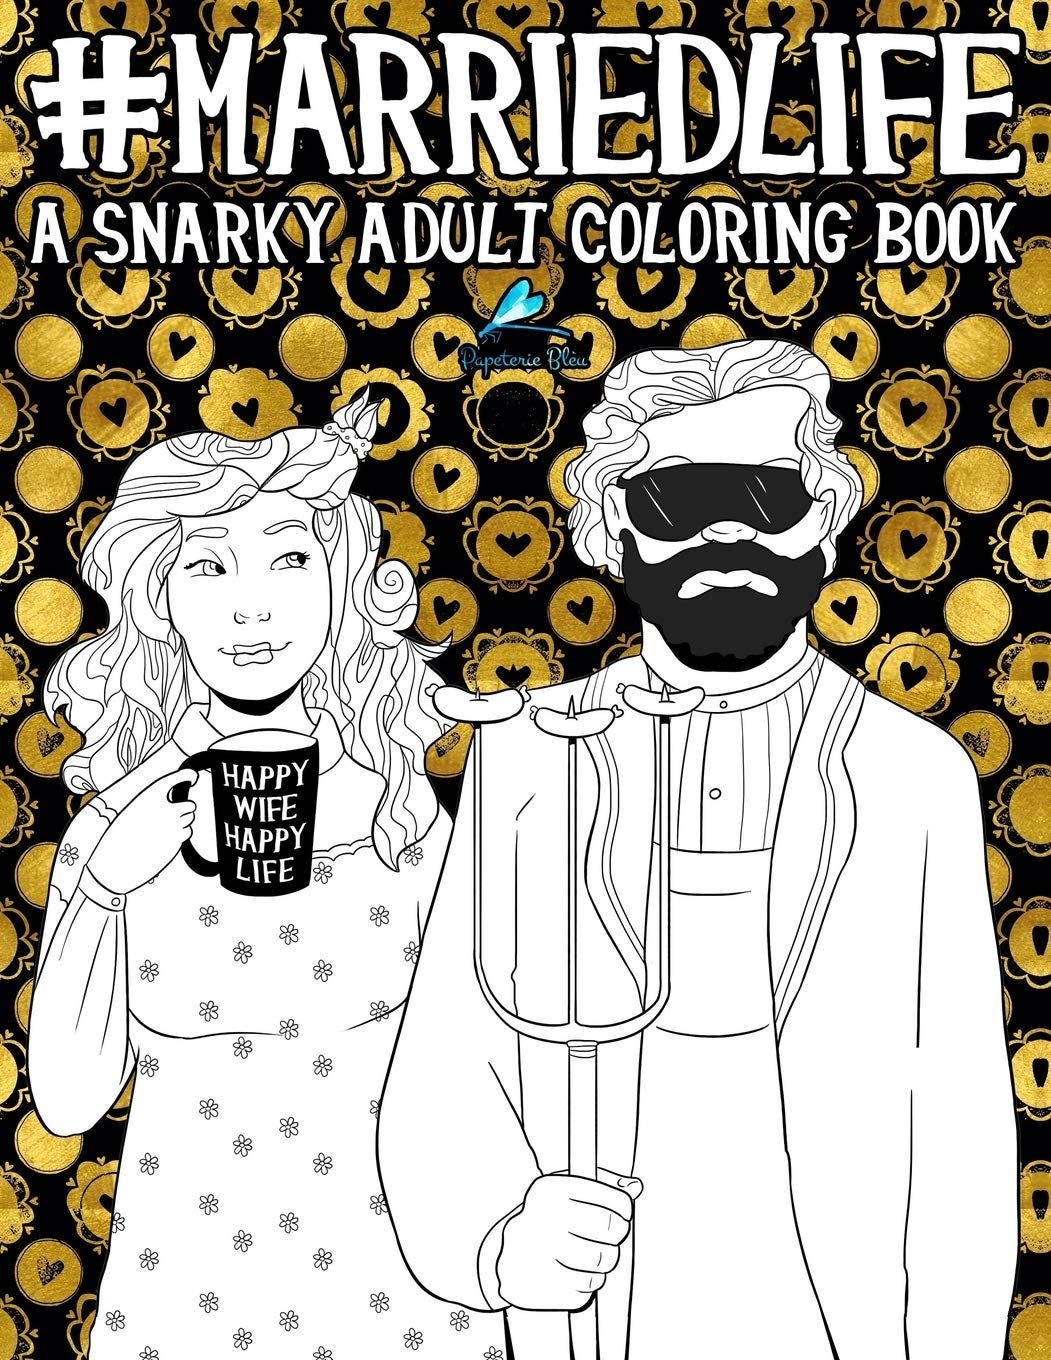 The 44 Best Amazon Adult Coloring Books in 2022 | by J.J. Pryor | Feedium |  Medium